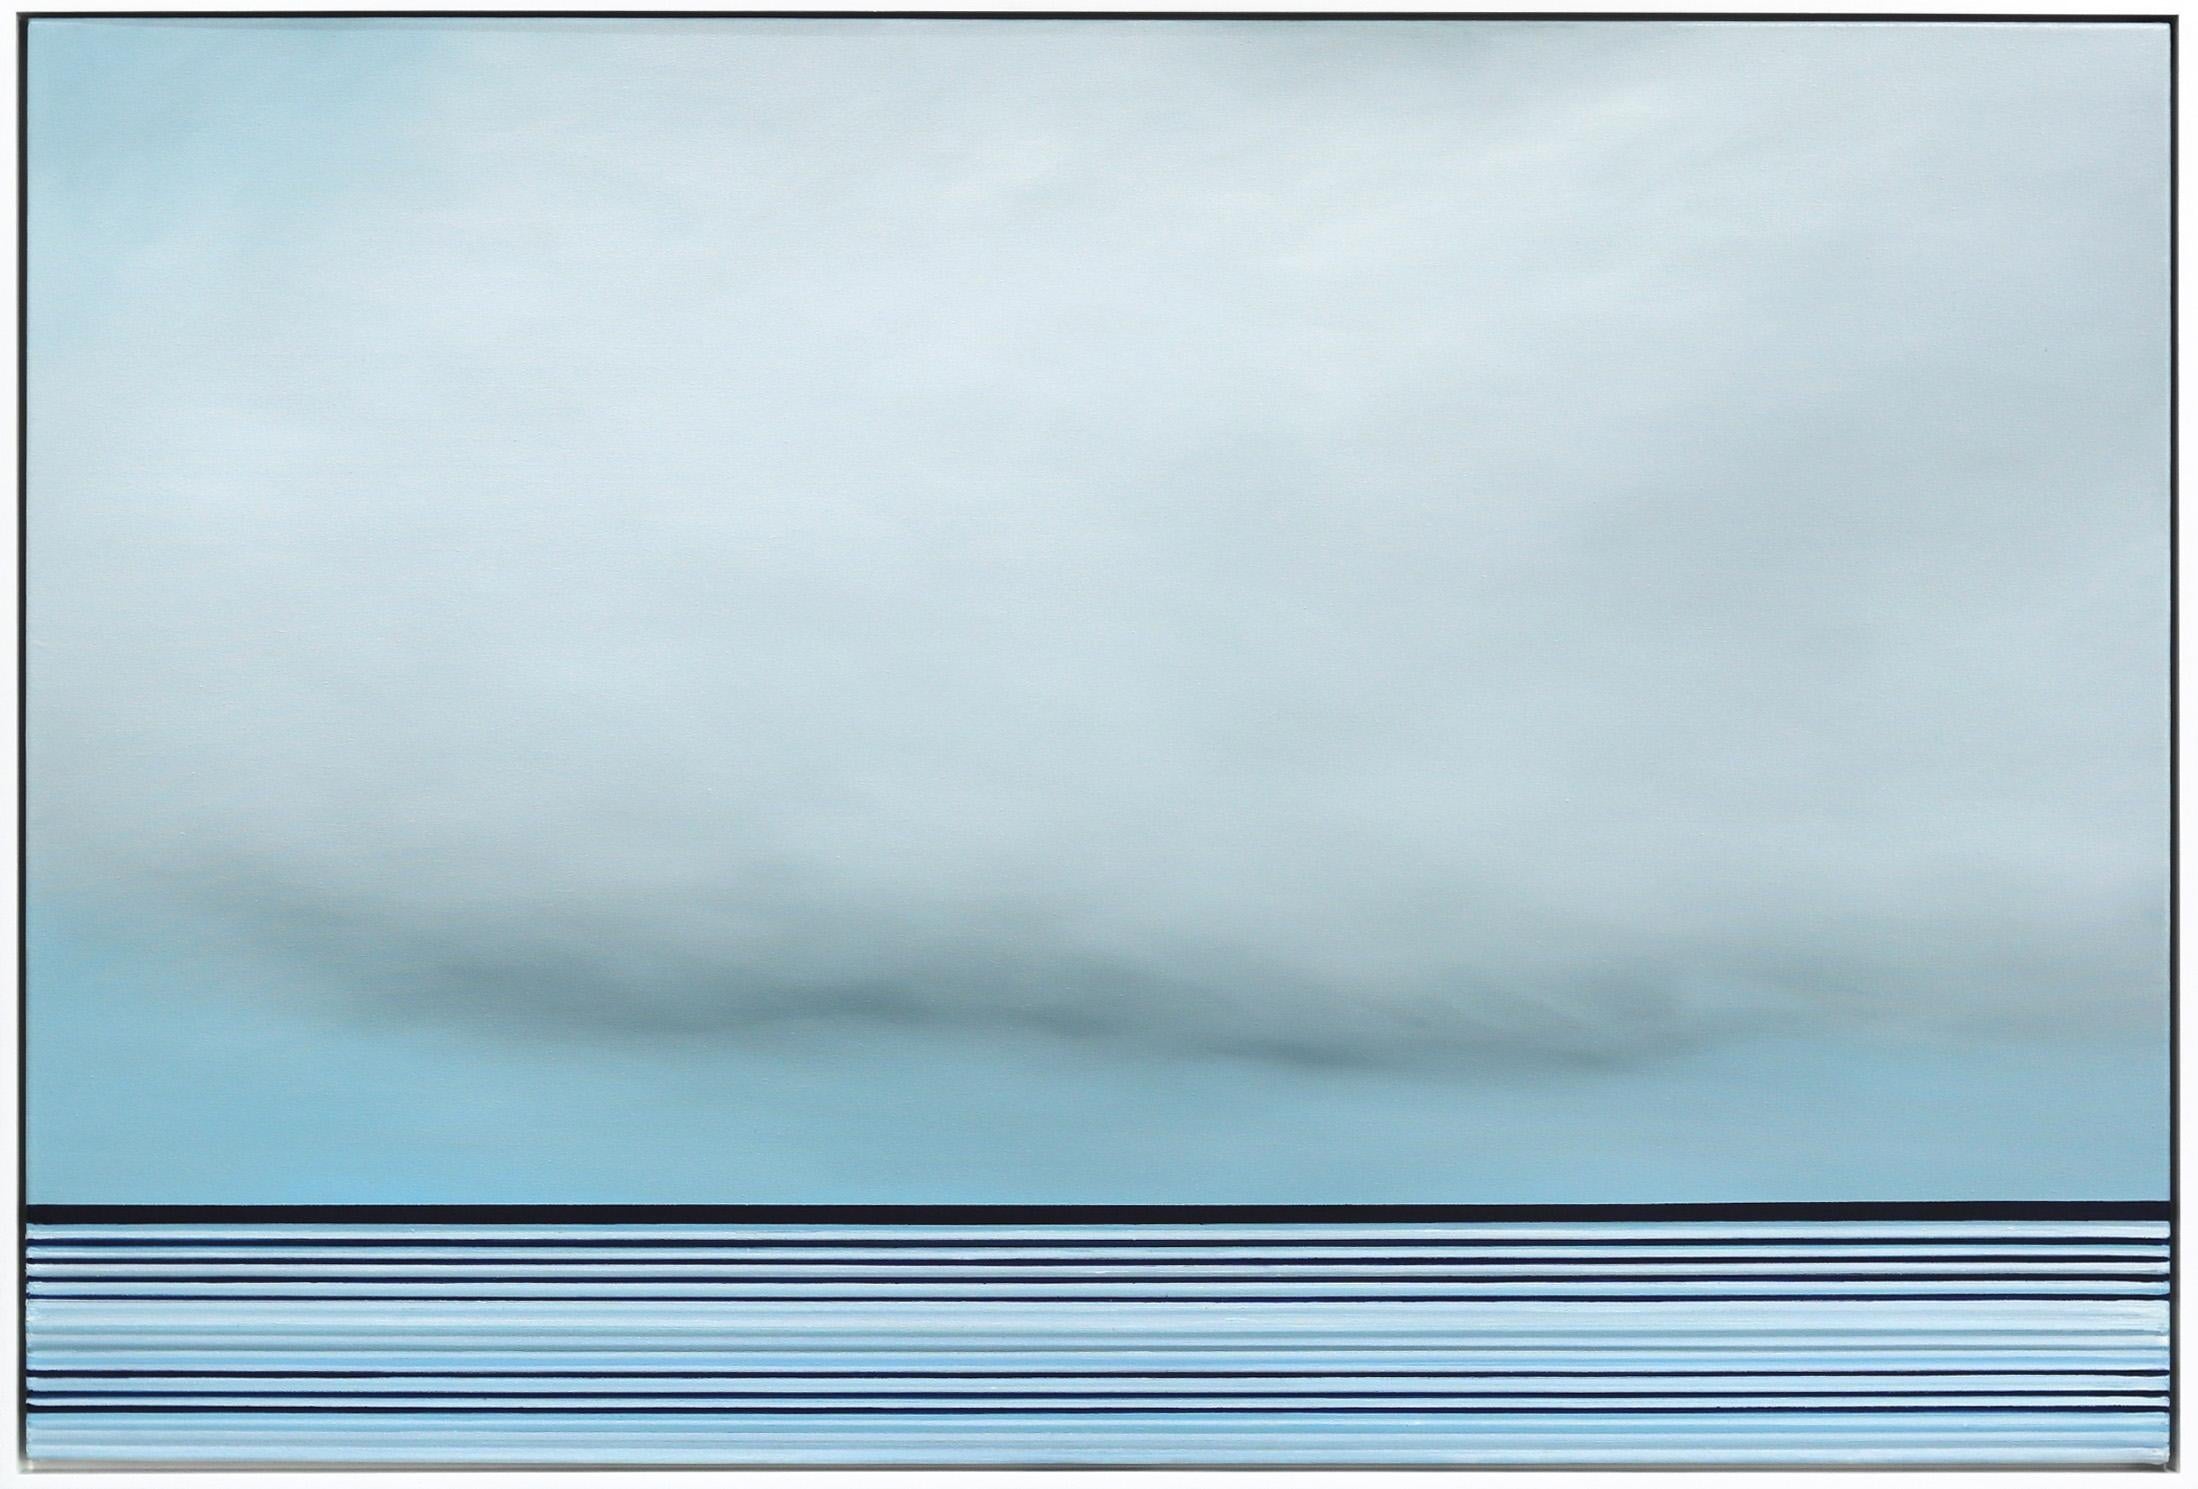 Untitled No. 632 - Framed Contemporary Minimalist Blue Artwork